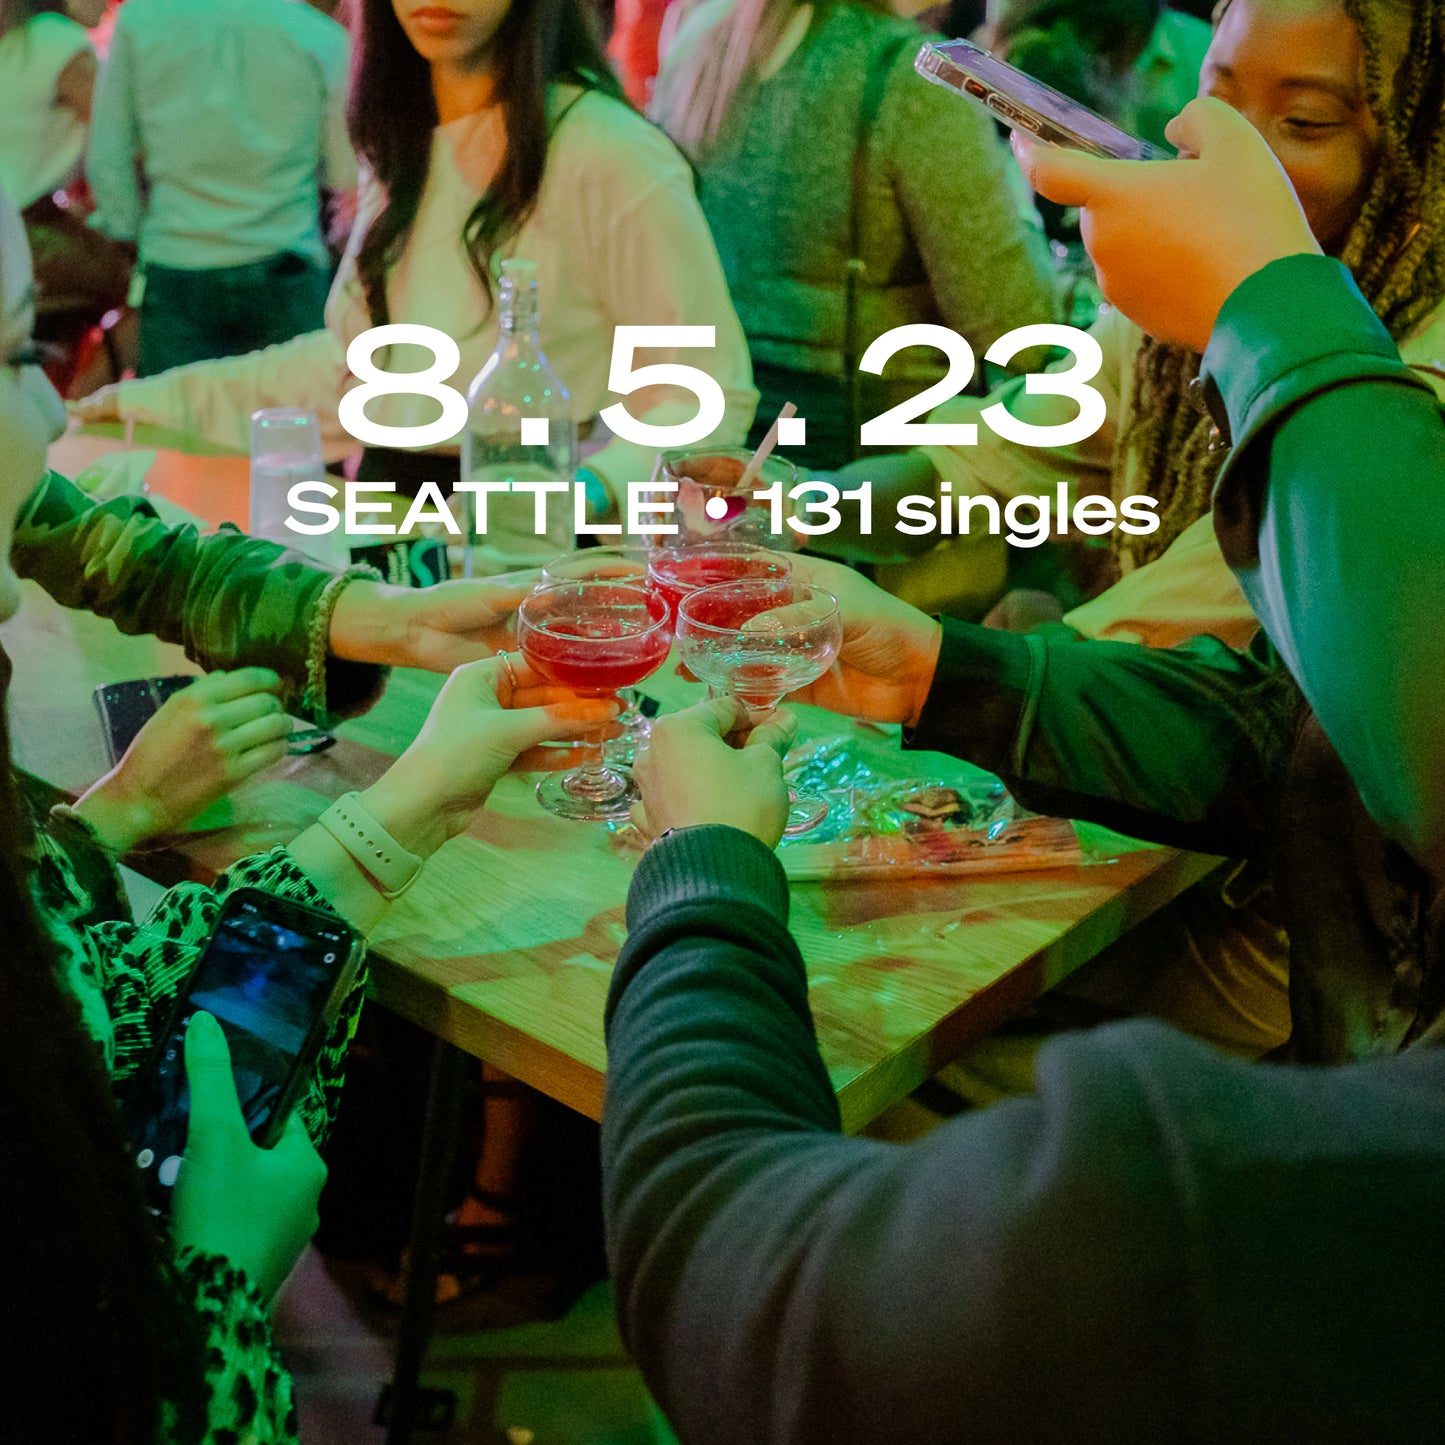 Seattle: Singles Happy Hour